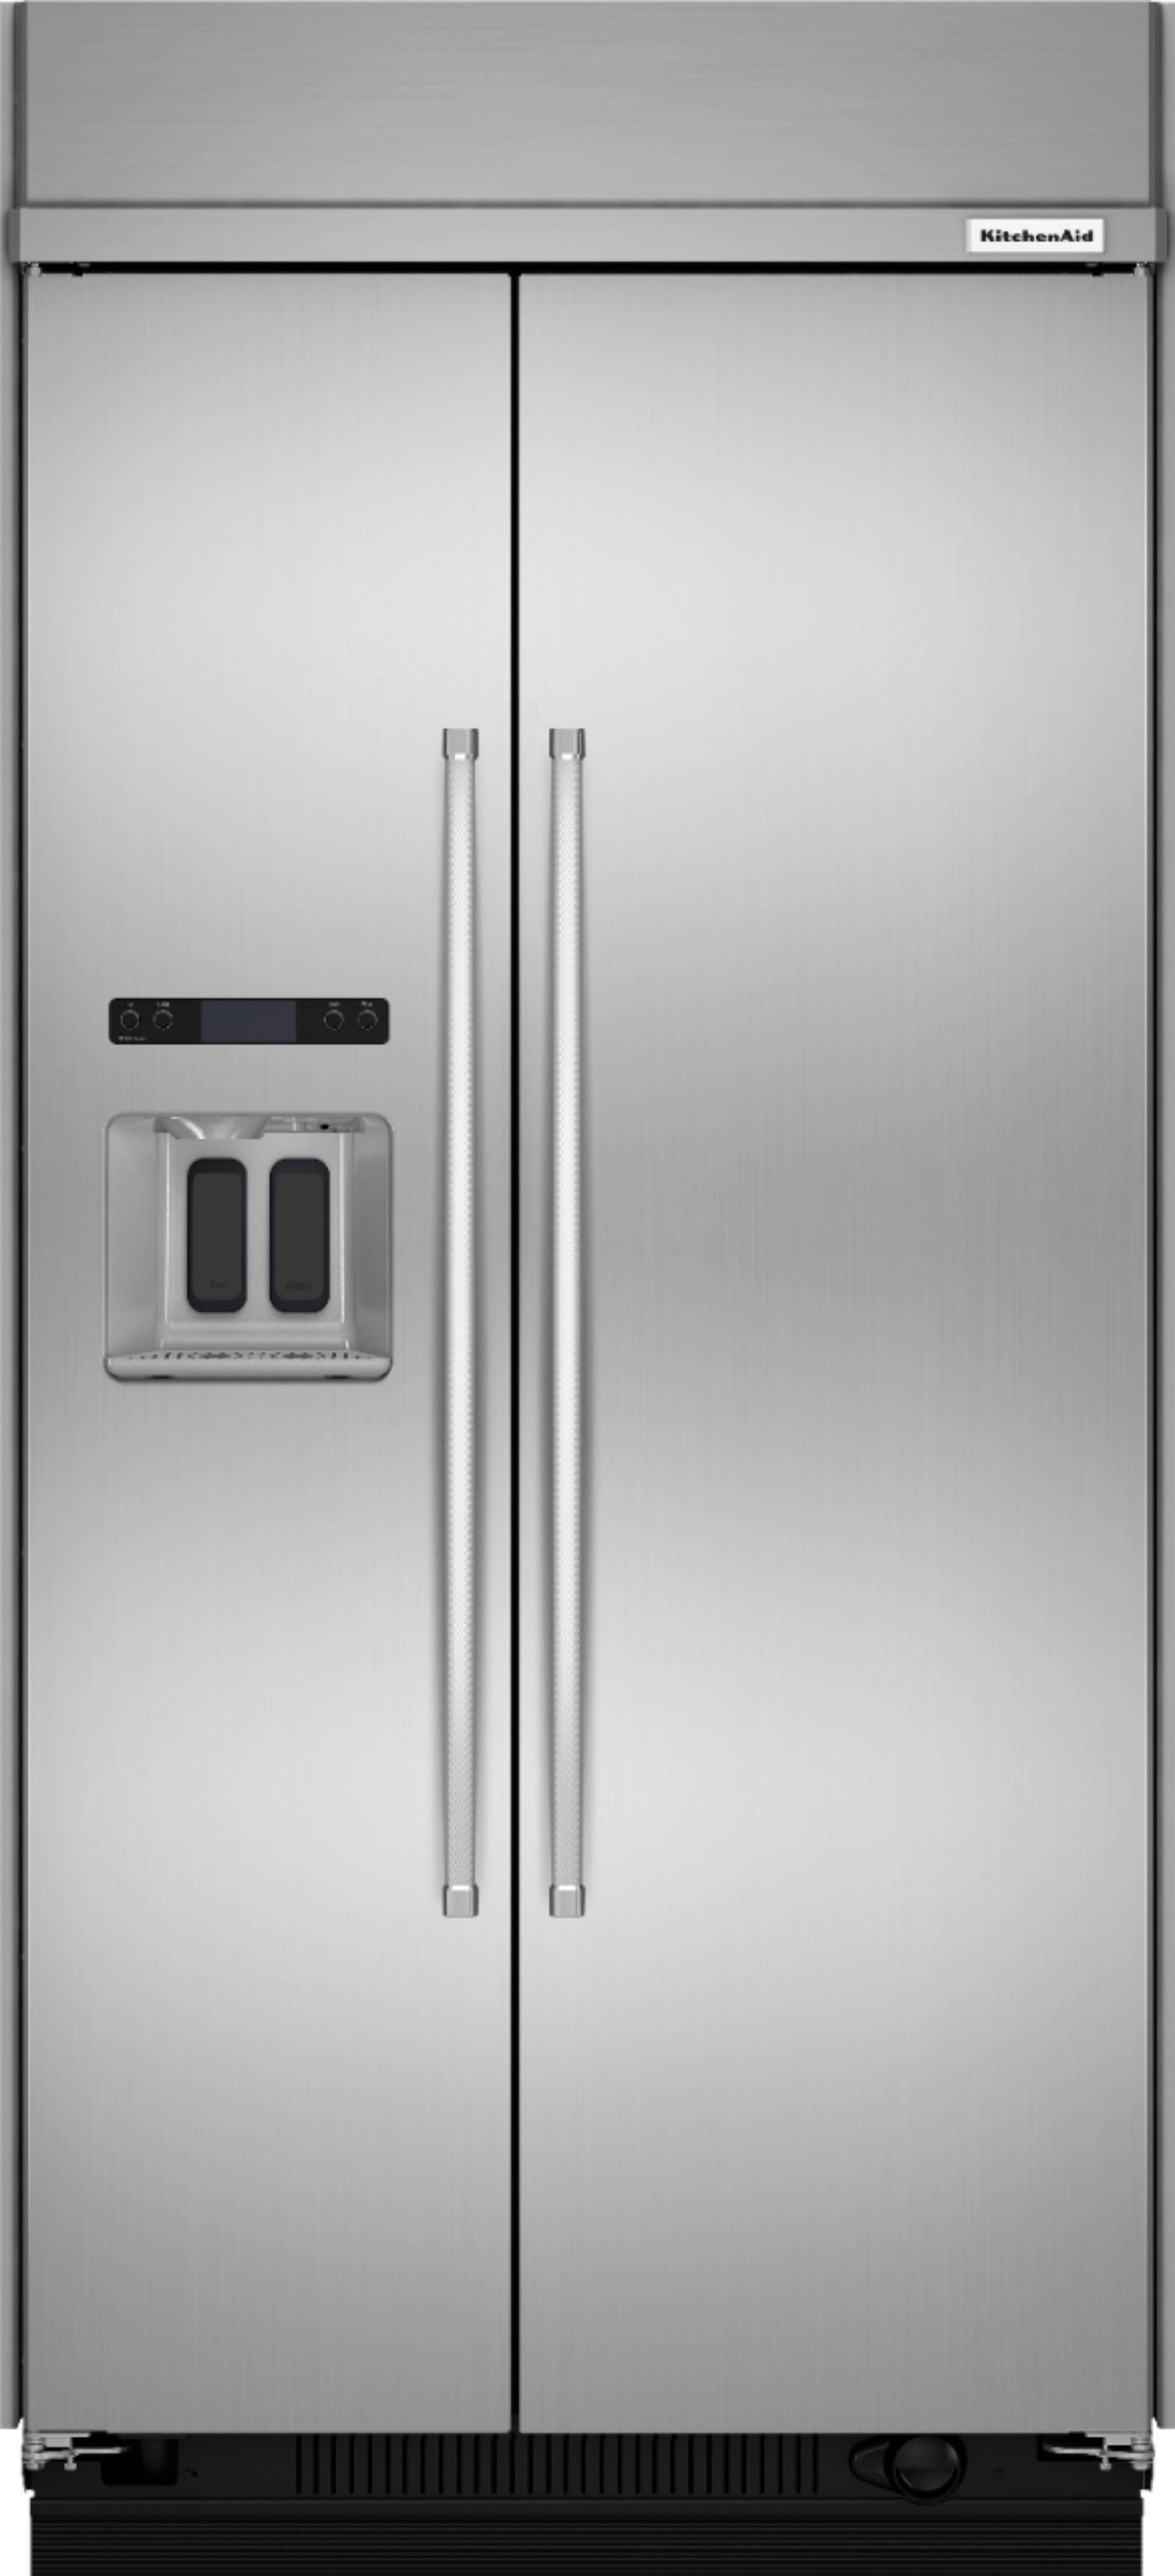 14+ Kitchenaid superba refrigerator owners manual ideas in 2021 